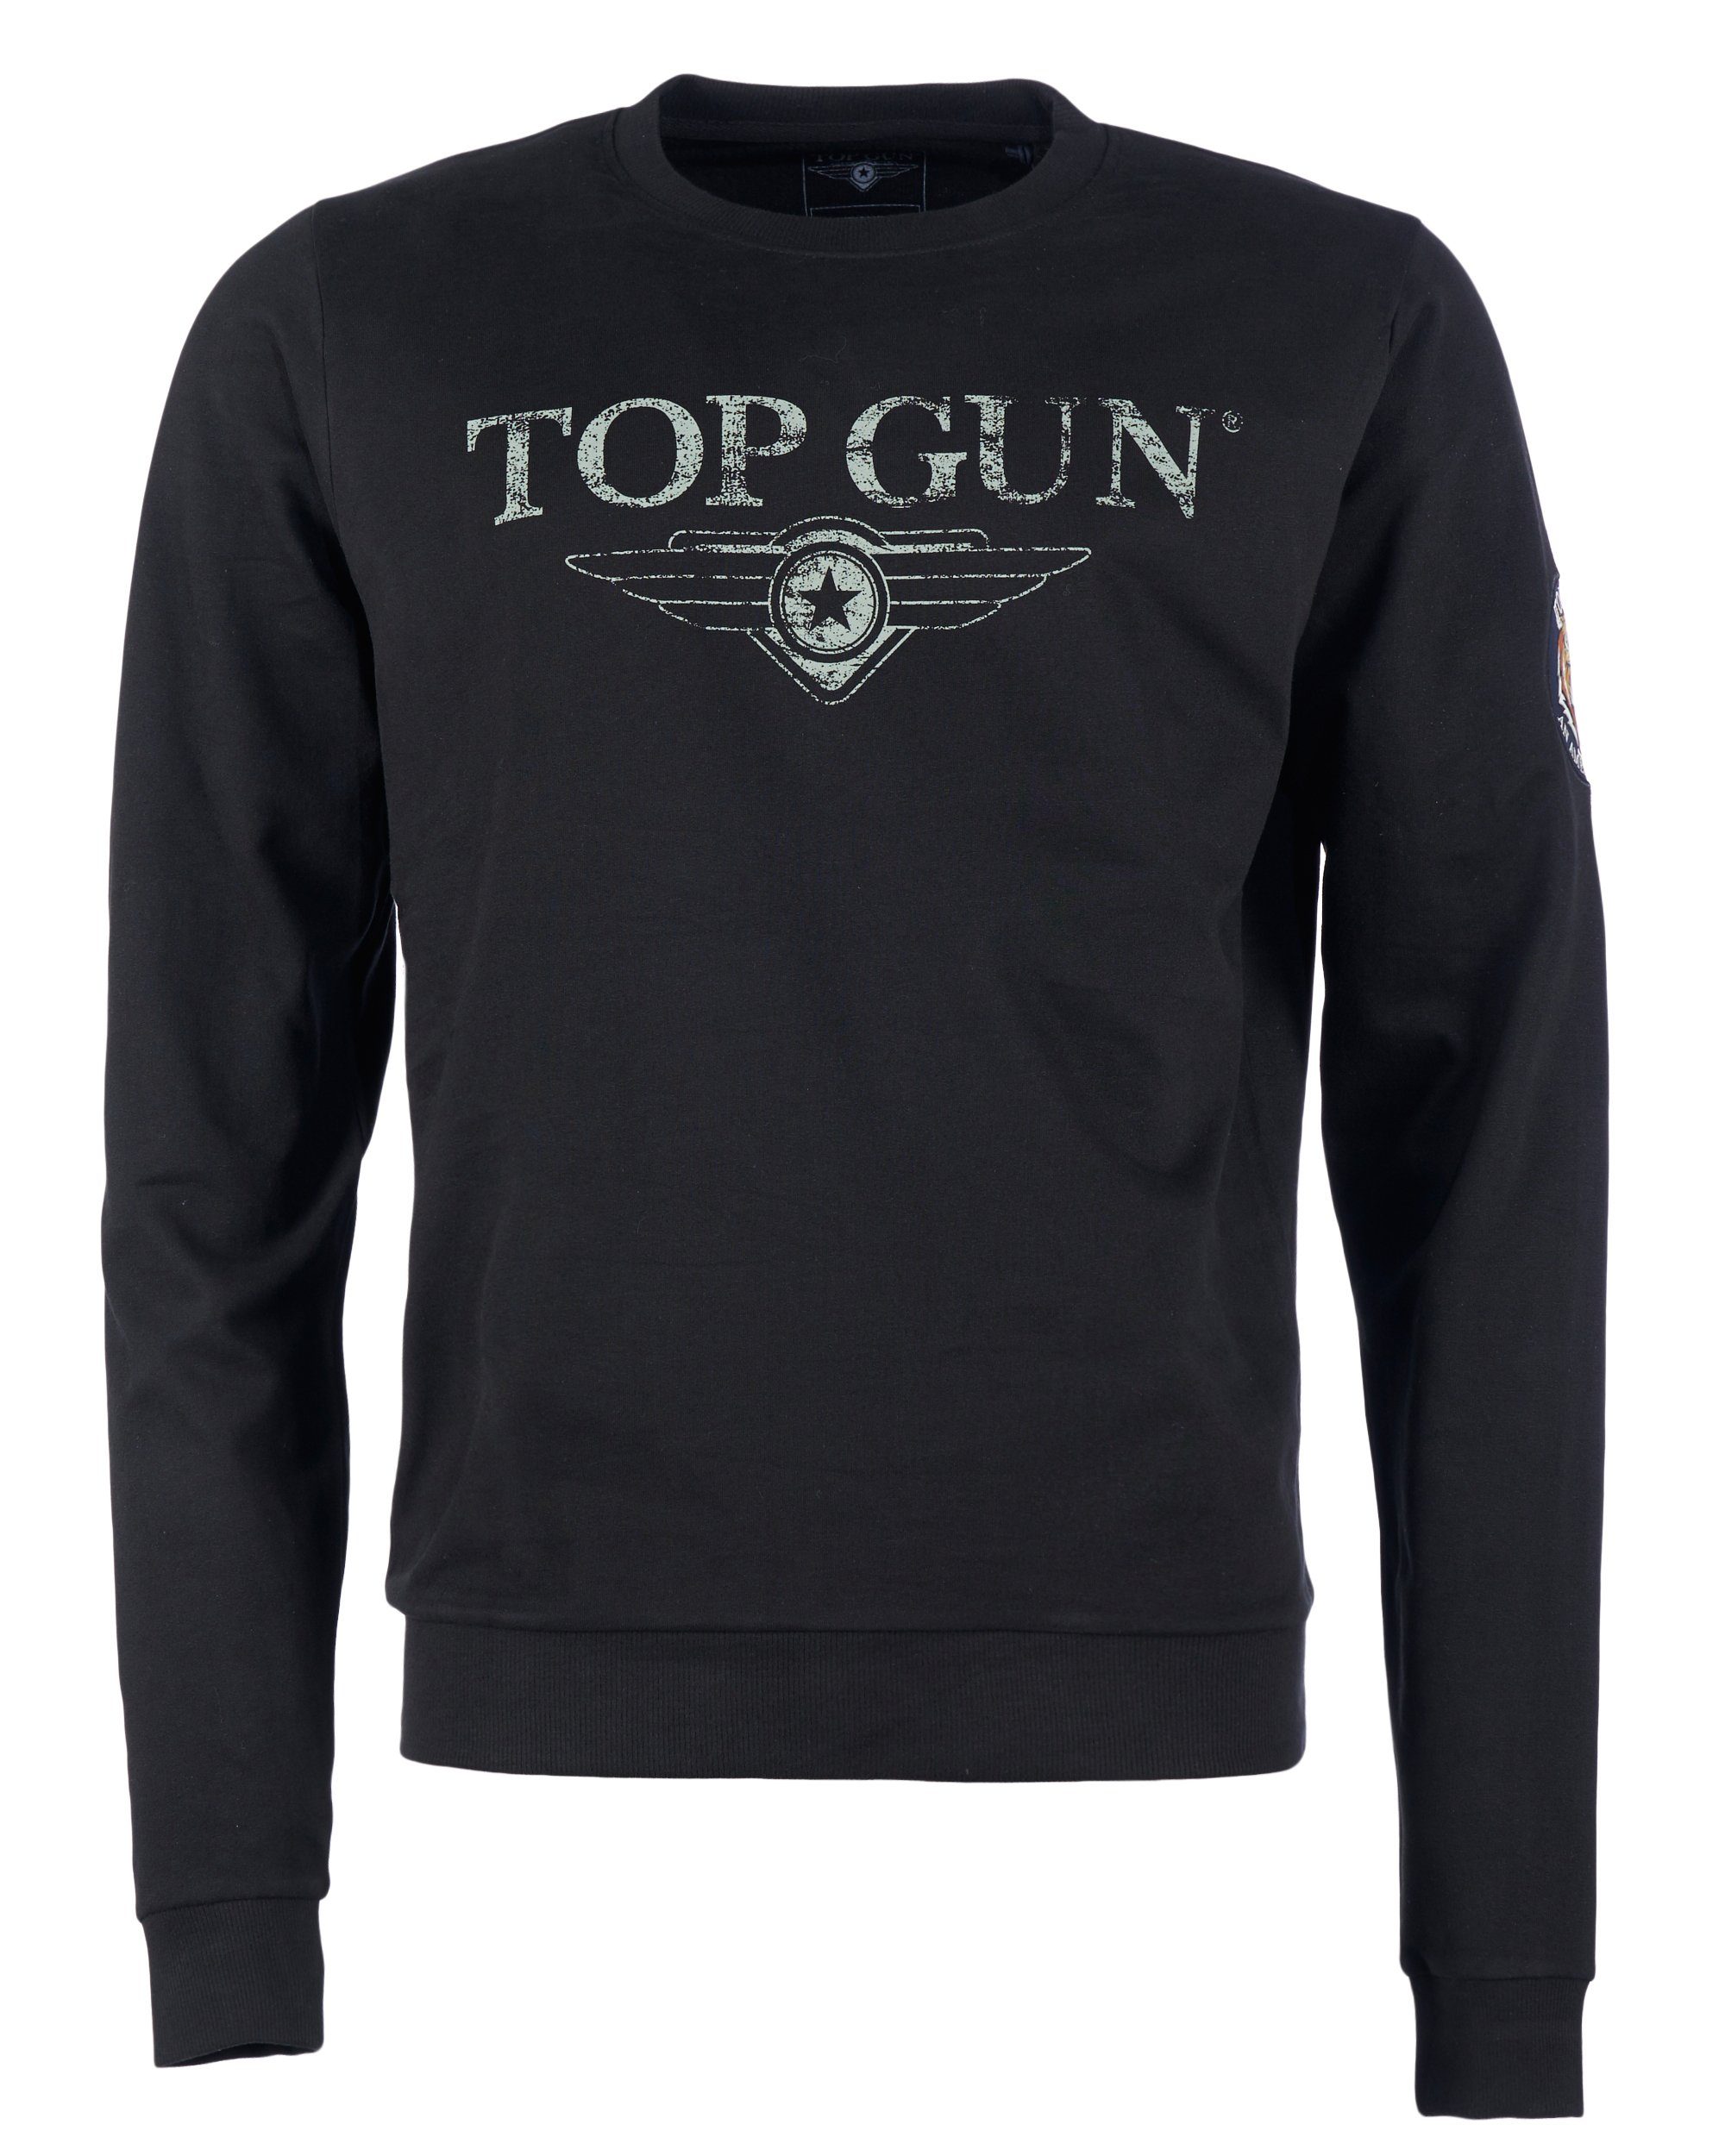 TG20213005 black GUN Sweater TOP